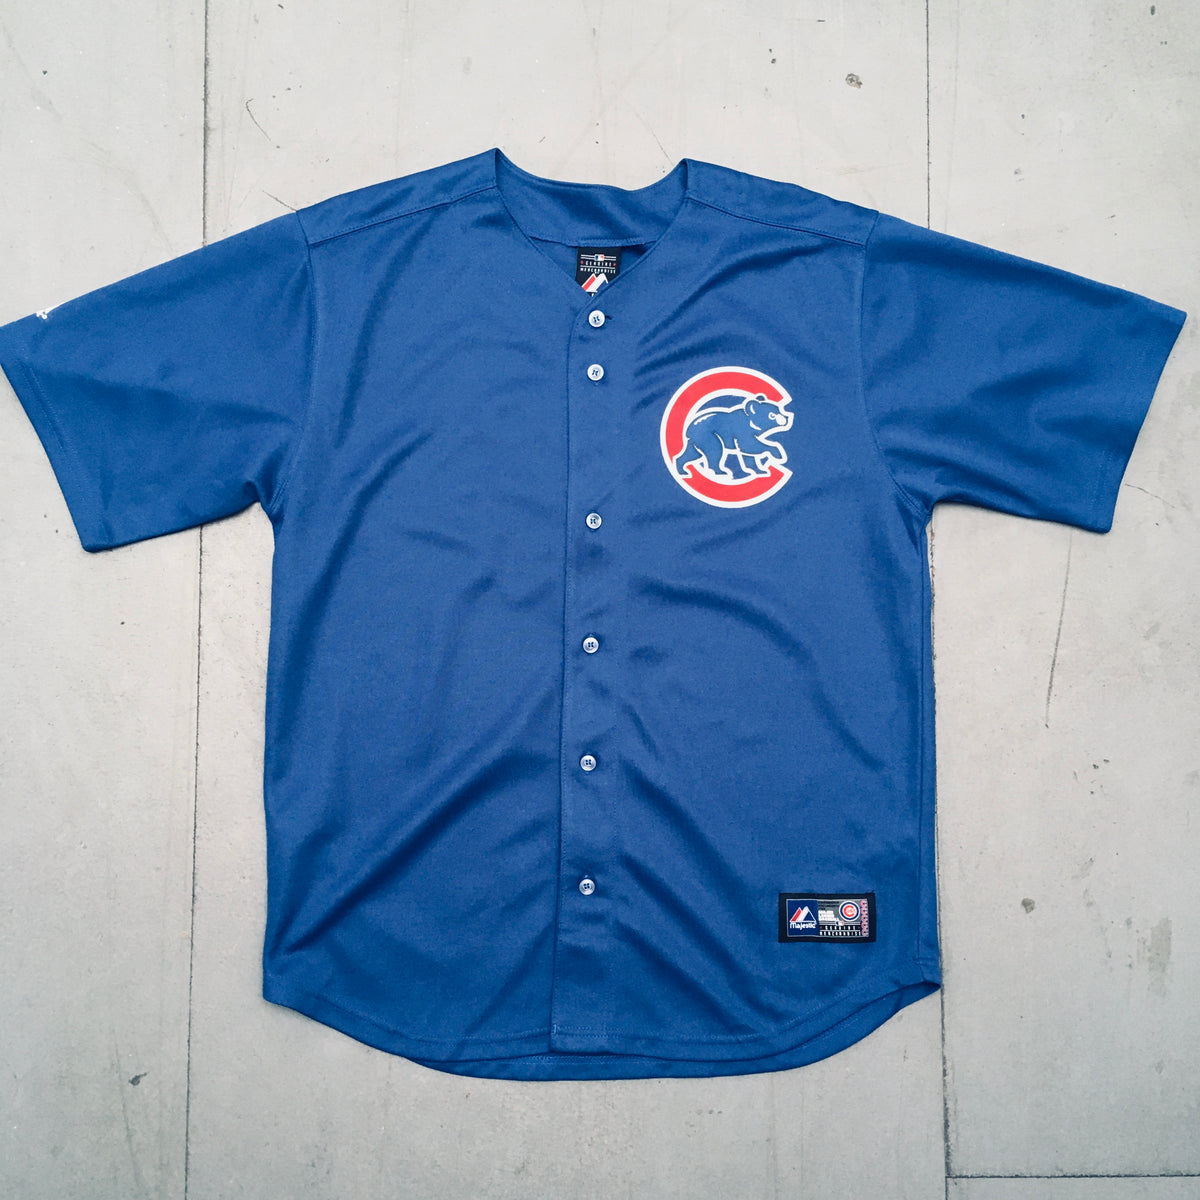 L) Vintage Majestic Chicago Cubs Jersey